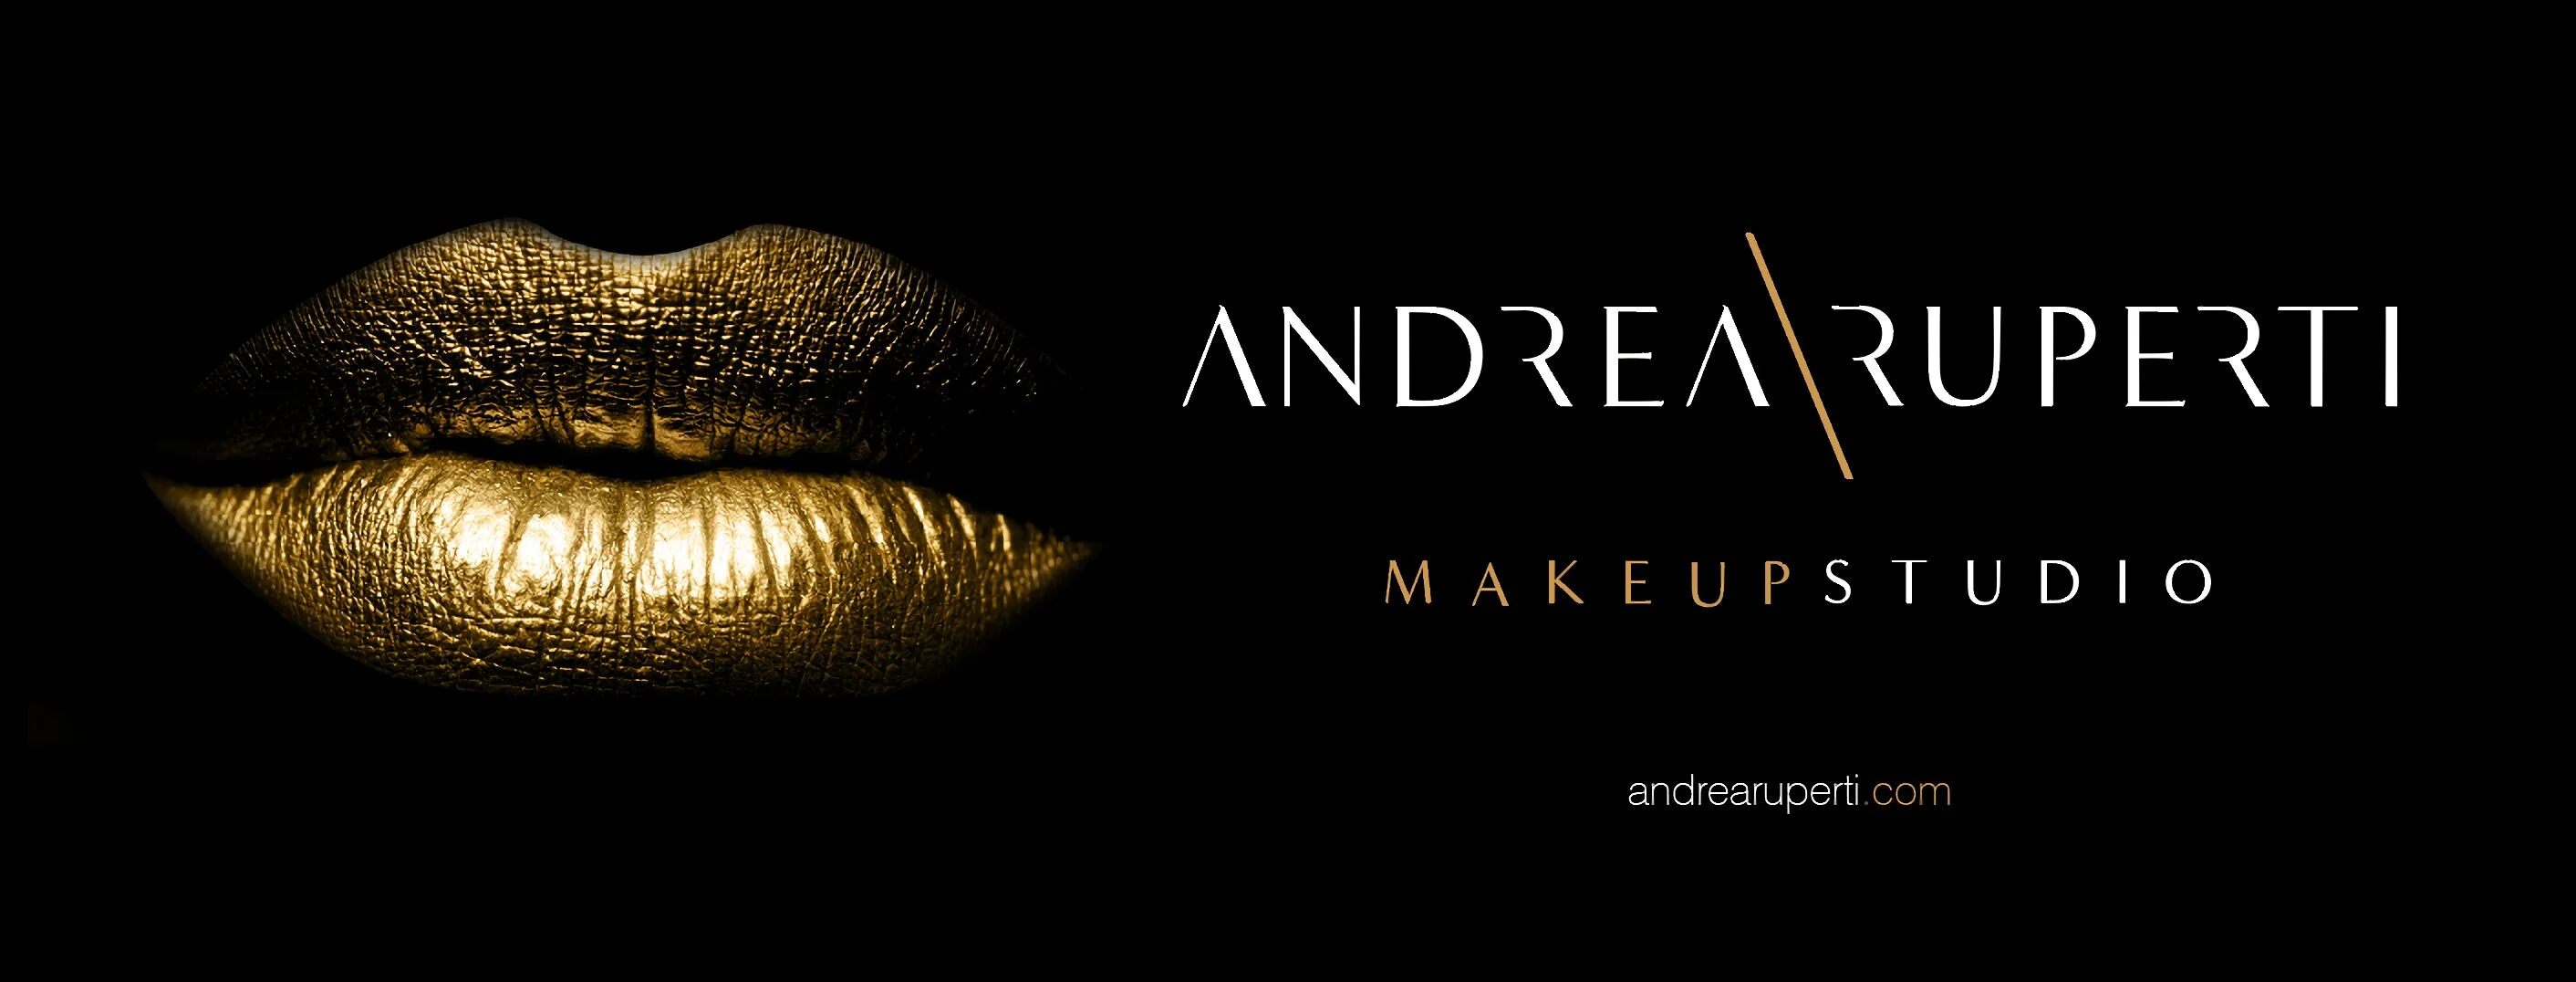 maquillaje-andrea-makeup-13965